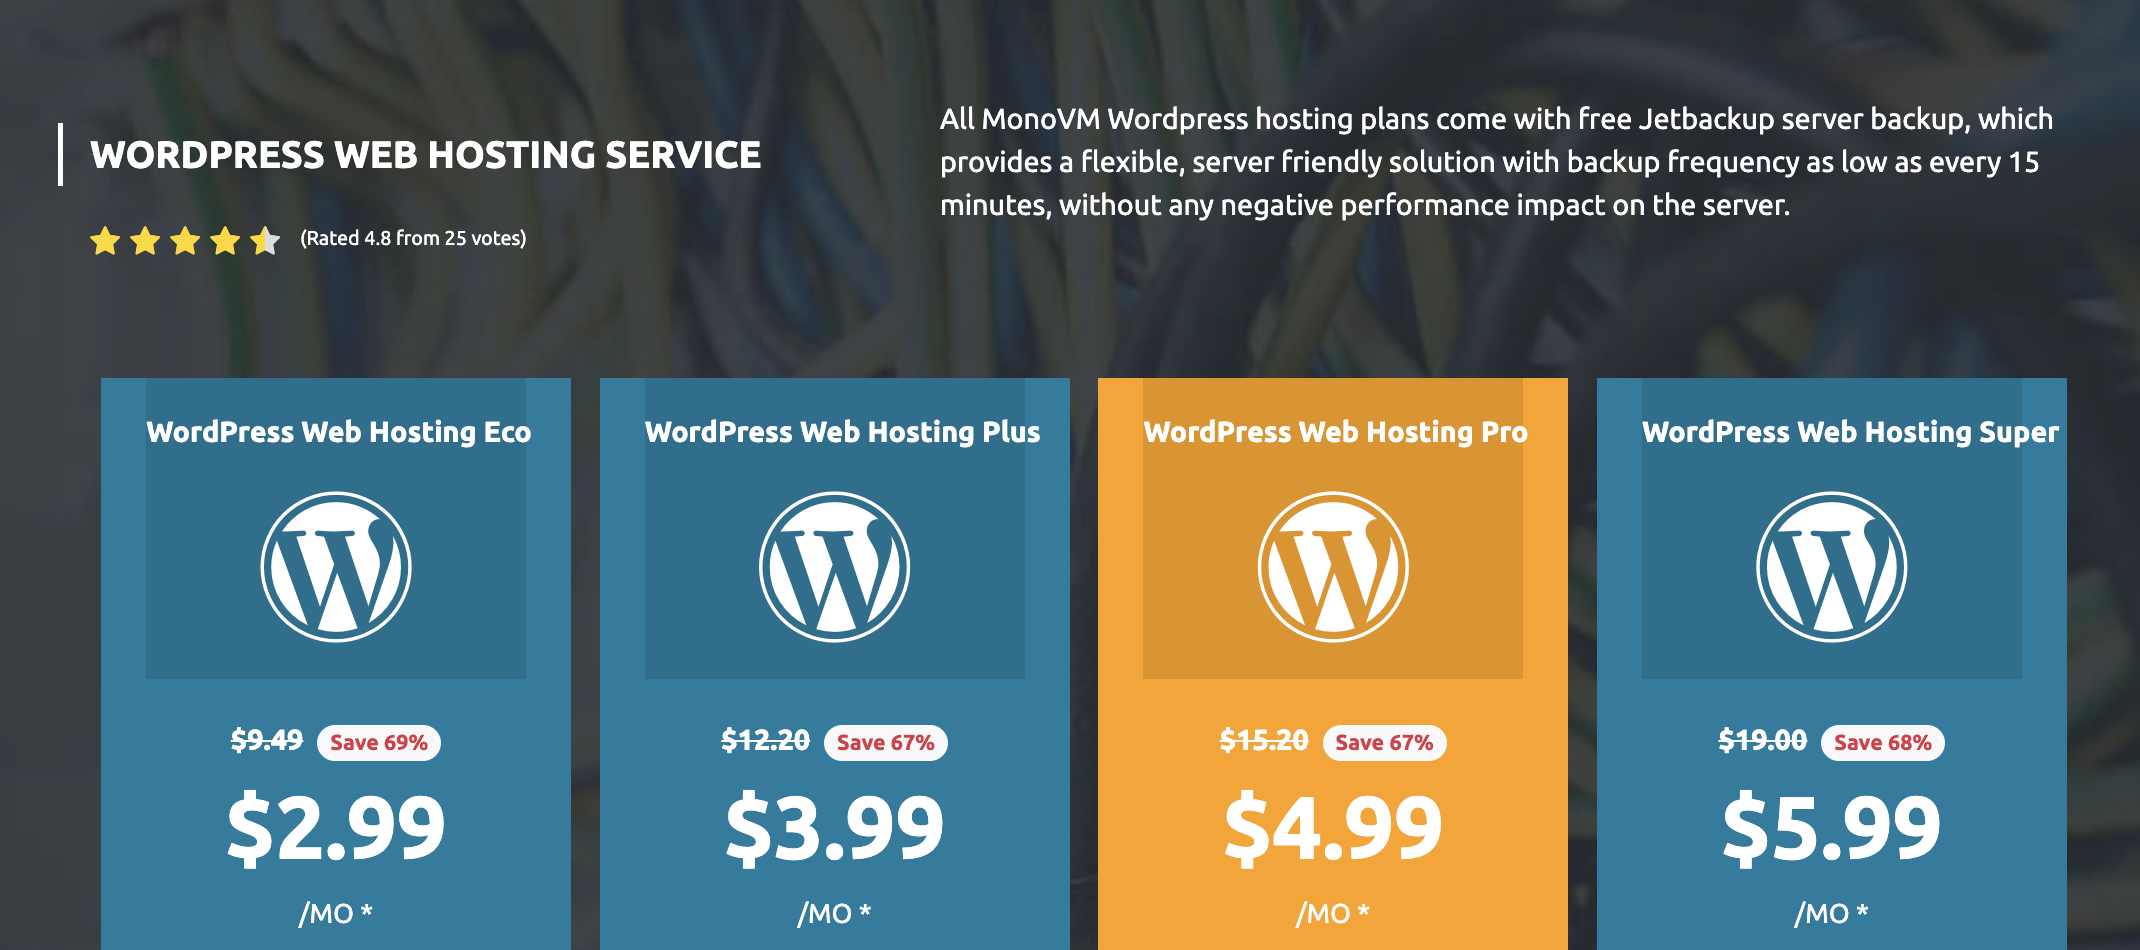 MonoVM WordPress Web Hosting Pricing Plans